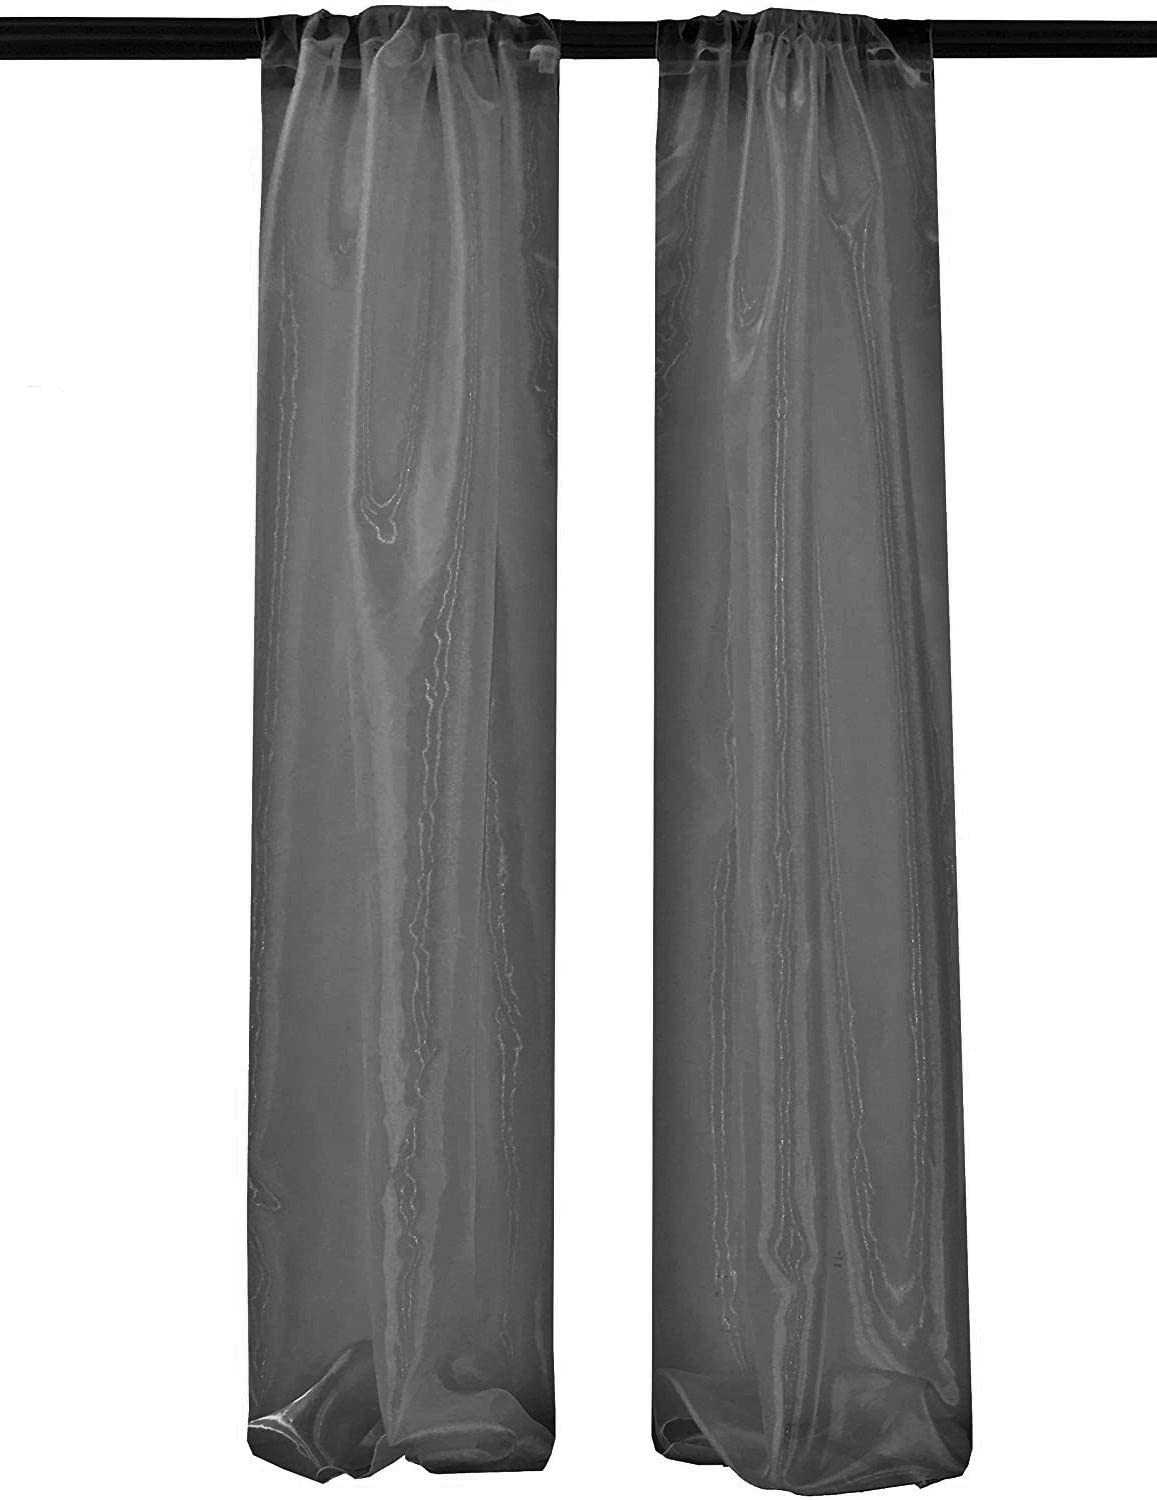 100% Polyester Sheer Mirror Organza Backdrop Drape, Curtain Panels, Room Divider, 1 Pair (Black,